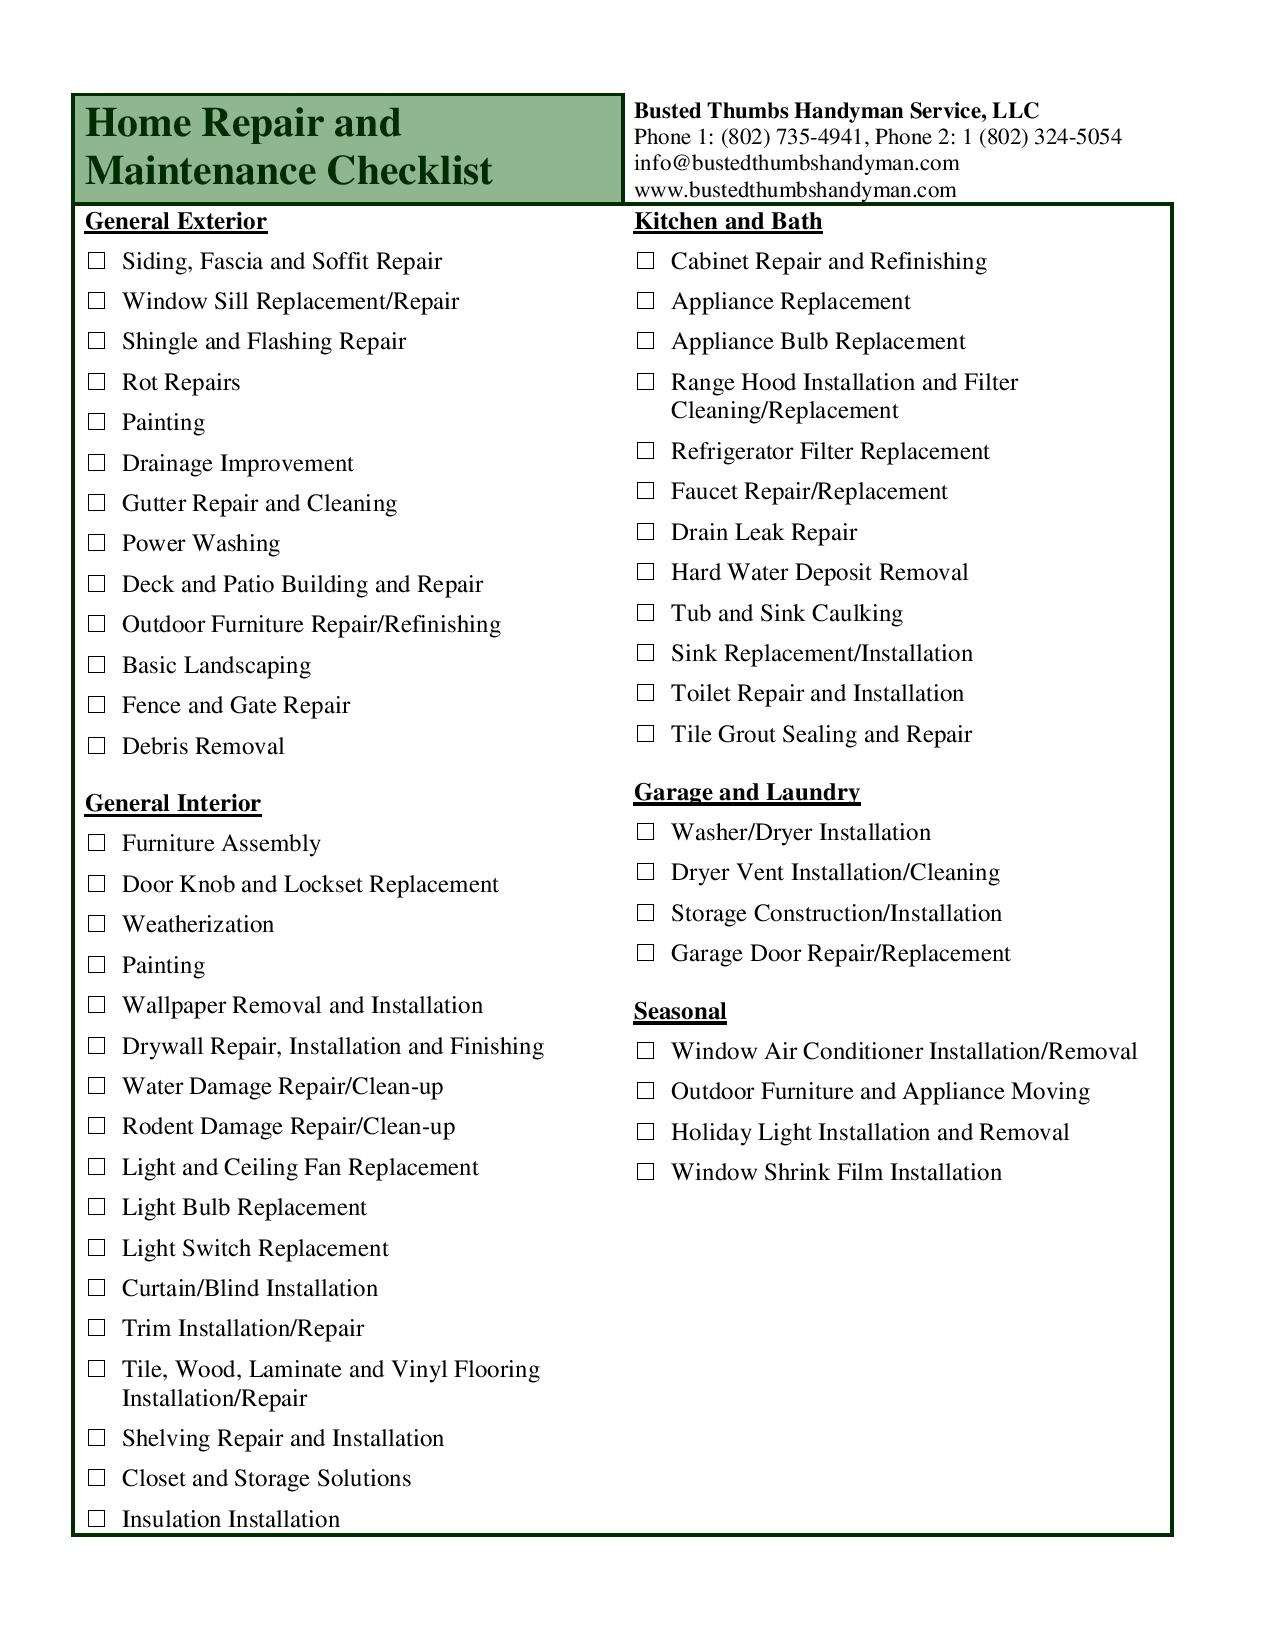 Home Design Checklist Pdf Intended For Home Improvement Checklist Template